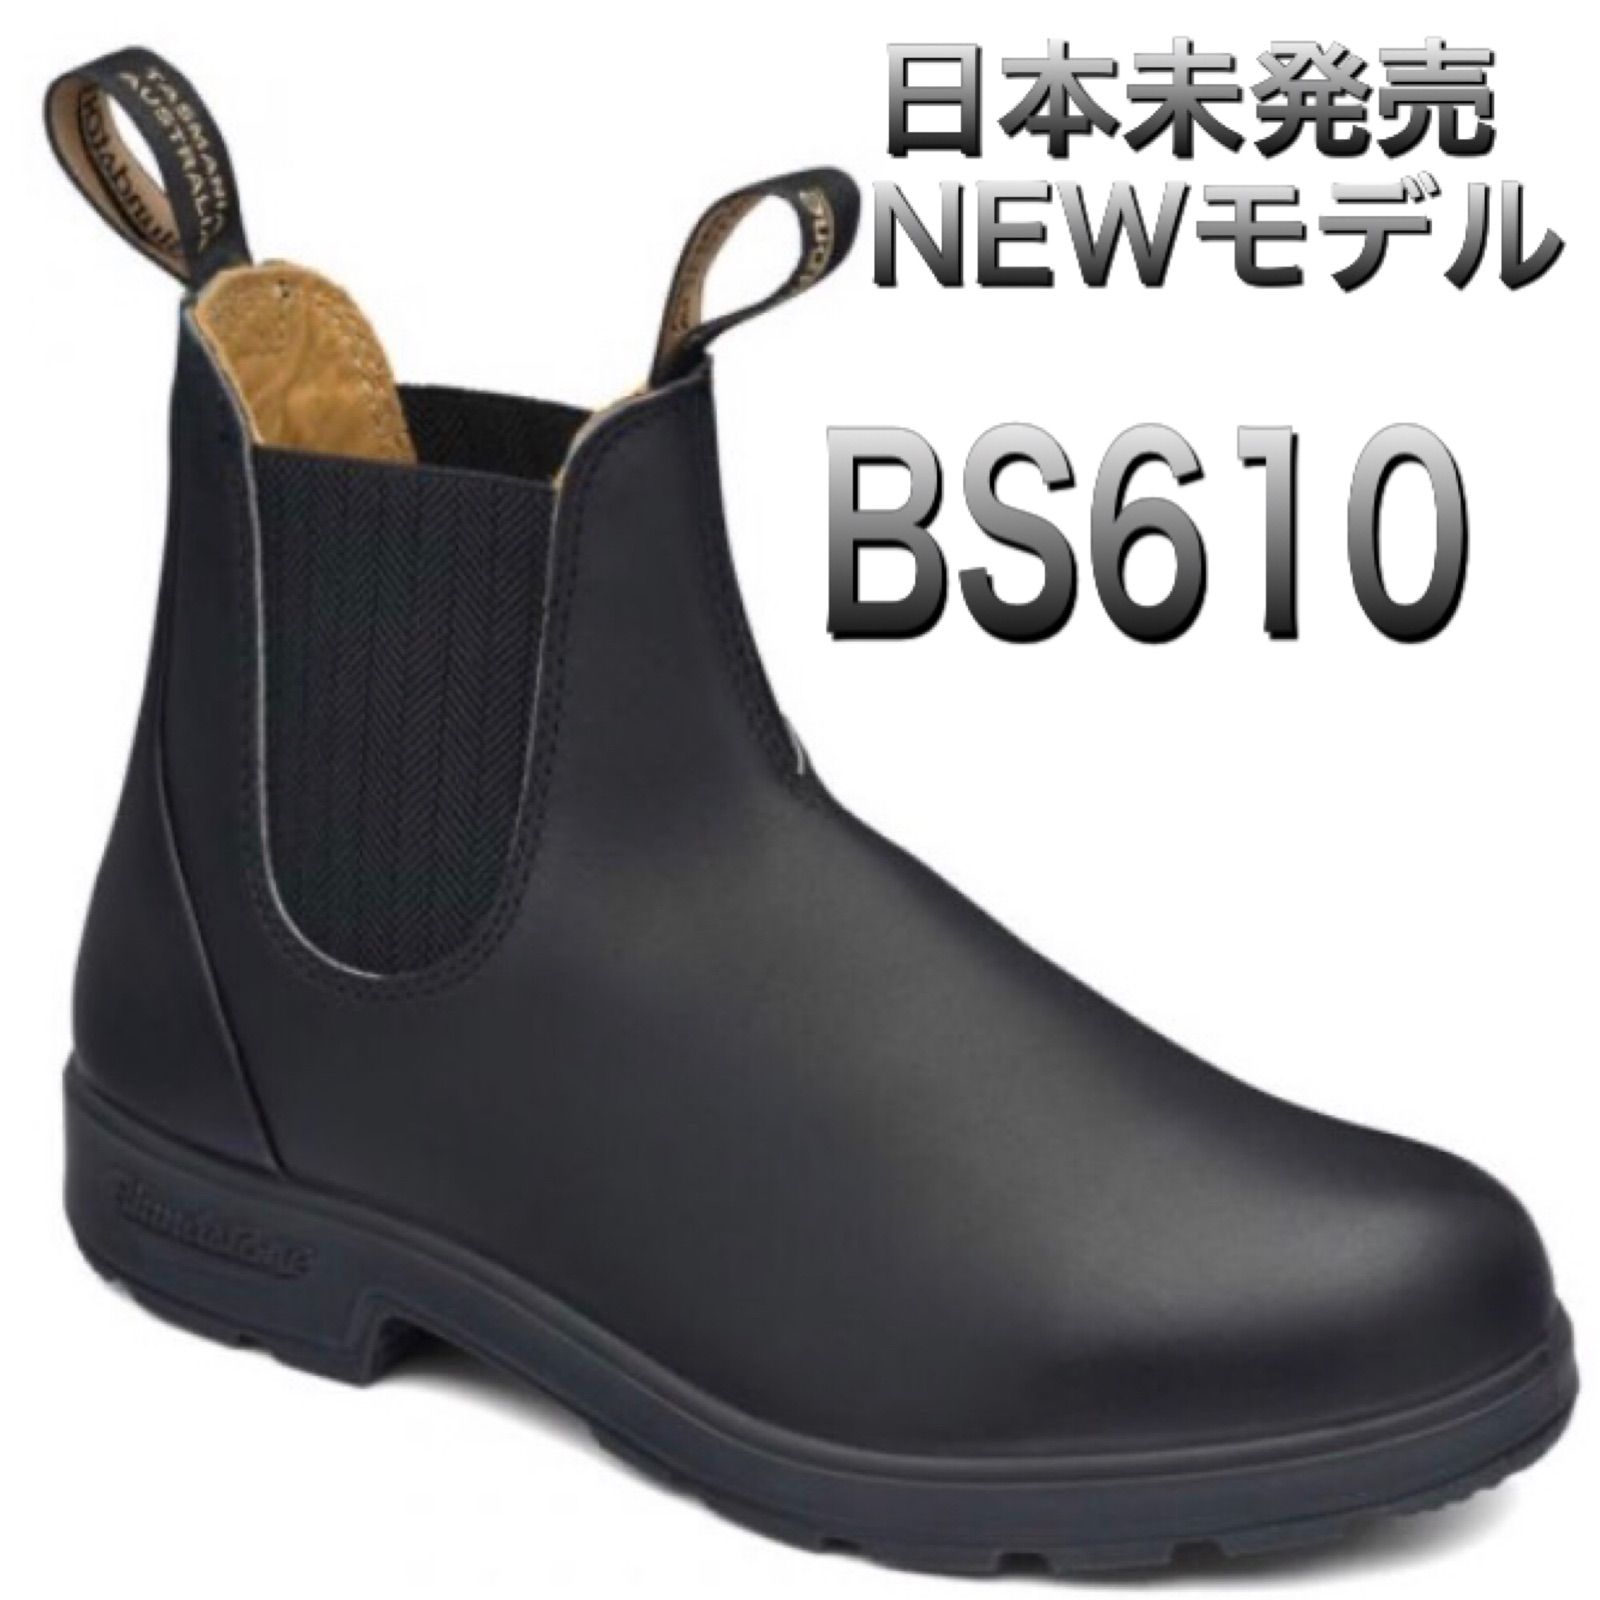 zealスニーカーコレクションUK7【新品】Blundstone 610 Black 日本未発売モデル